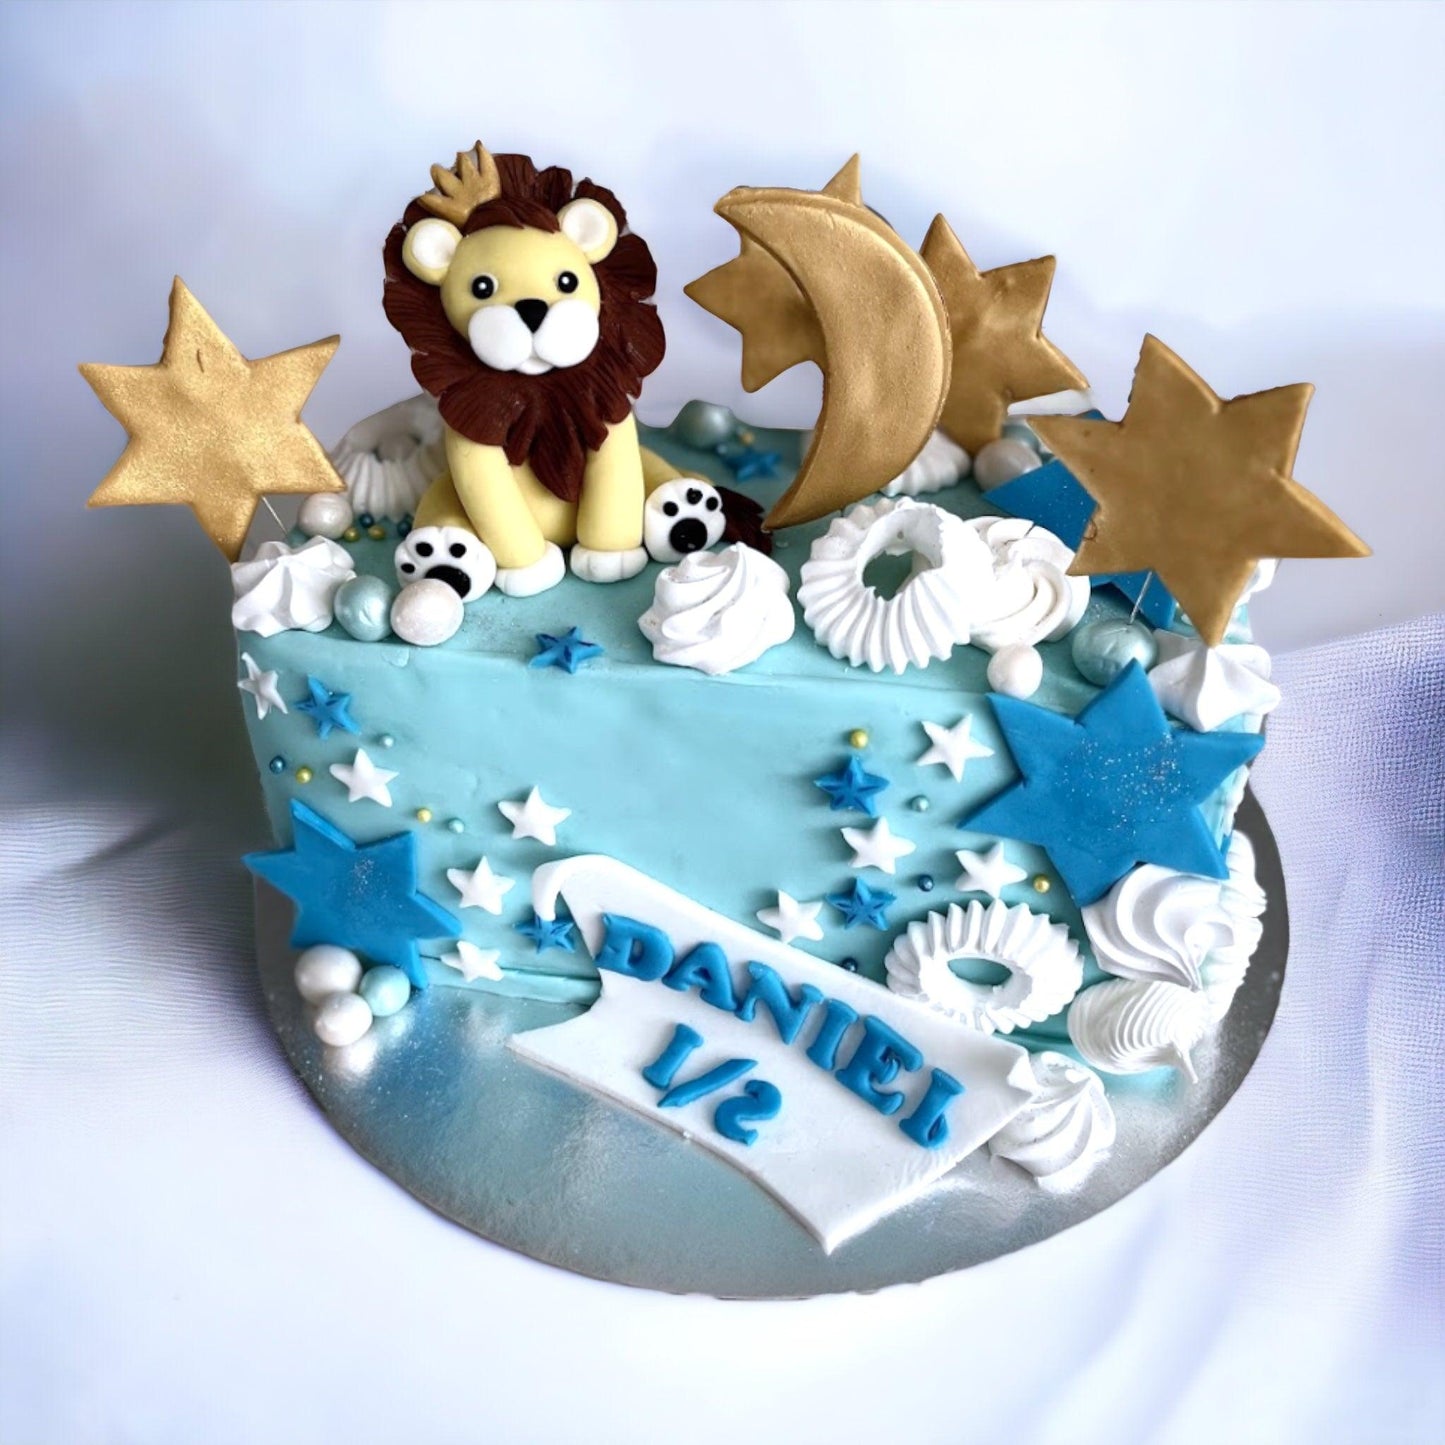 Lion birthday cake - Naturally_deliciousss